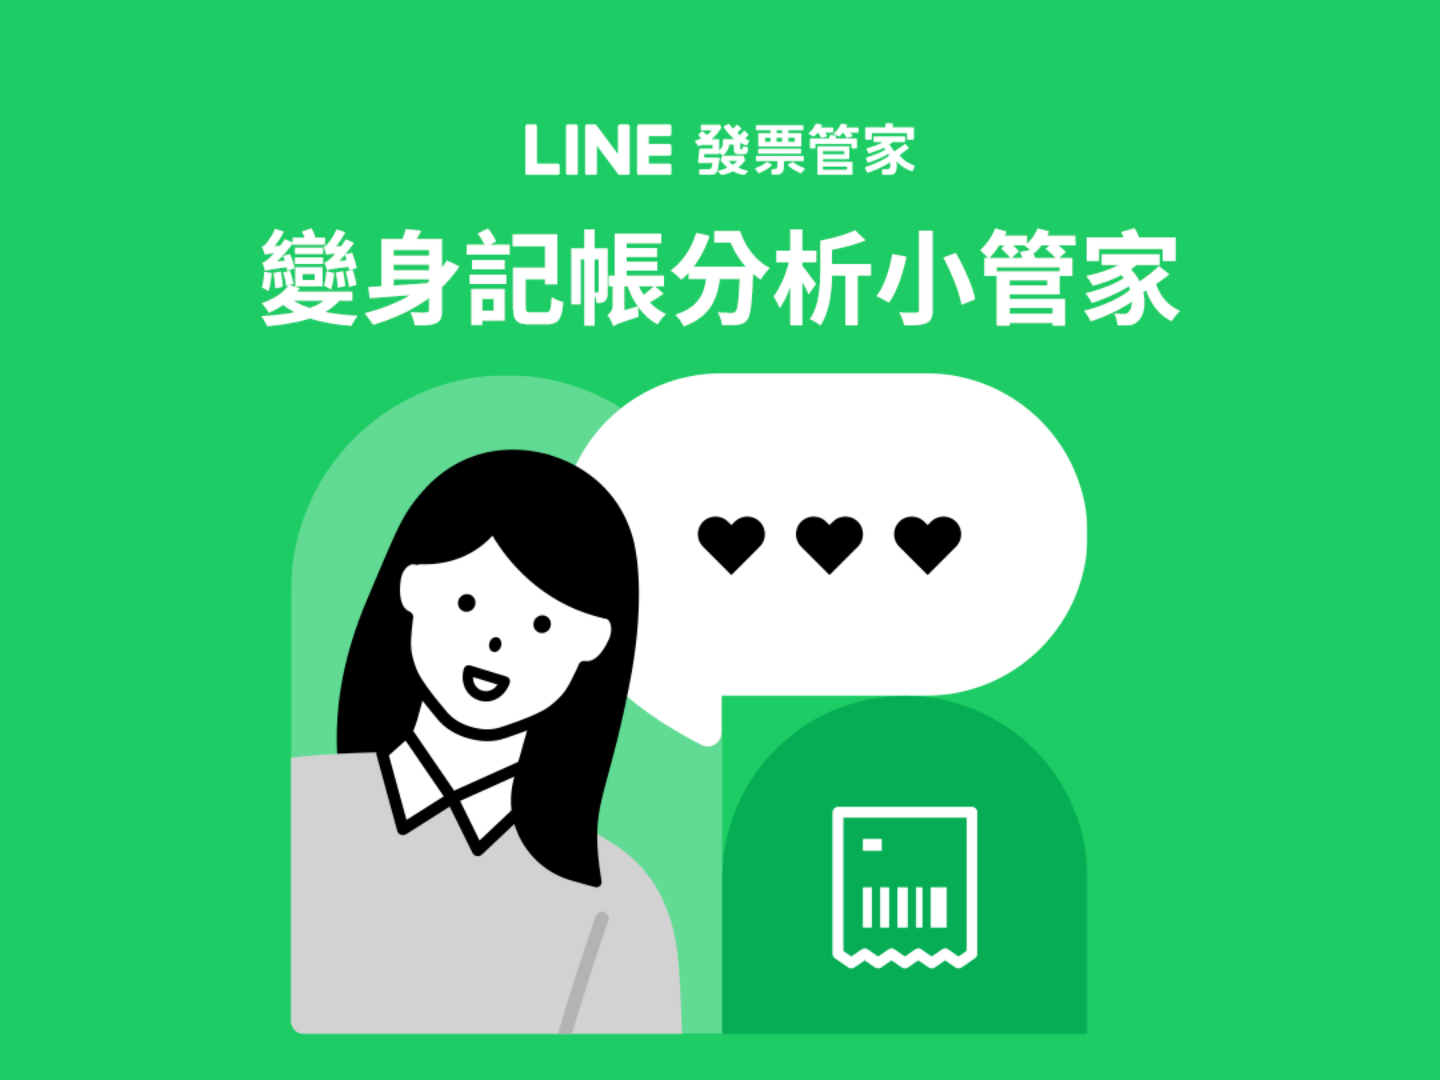 ‘ LINE 发票管家 ’推出三个新功能：手动记帐、消费分析、传统长型发票也可扫描！